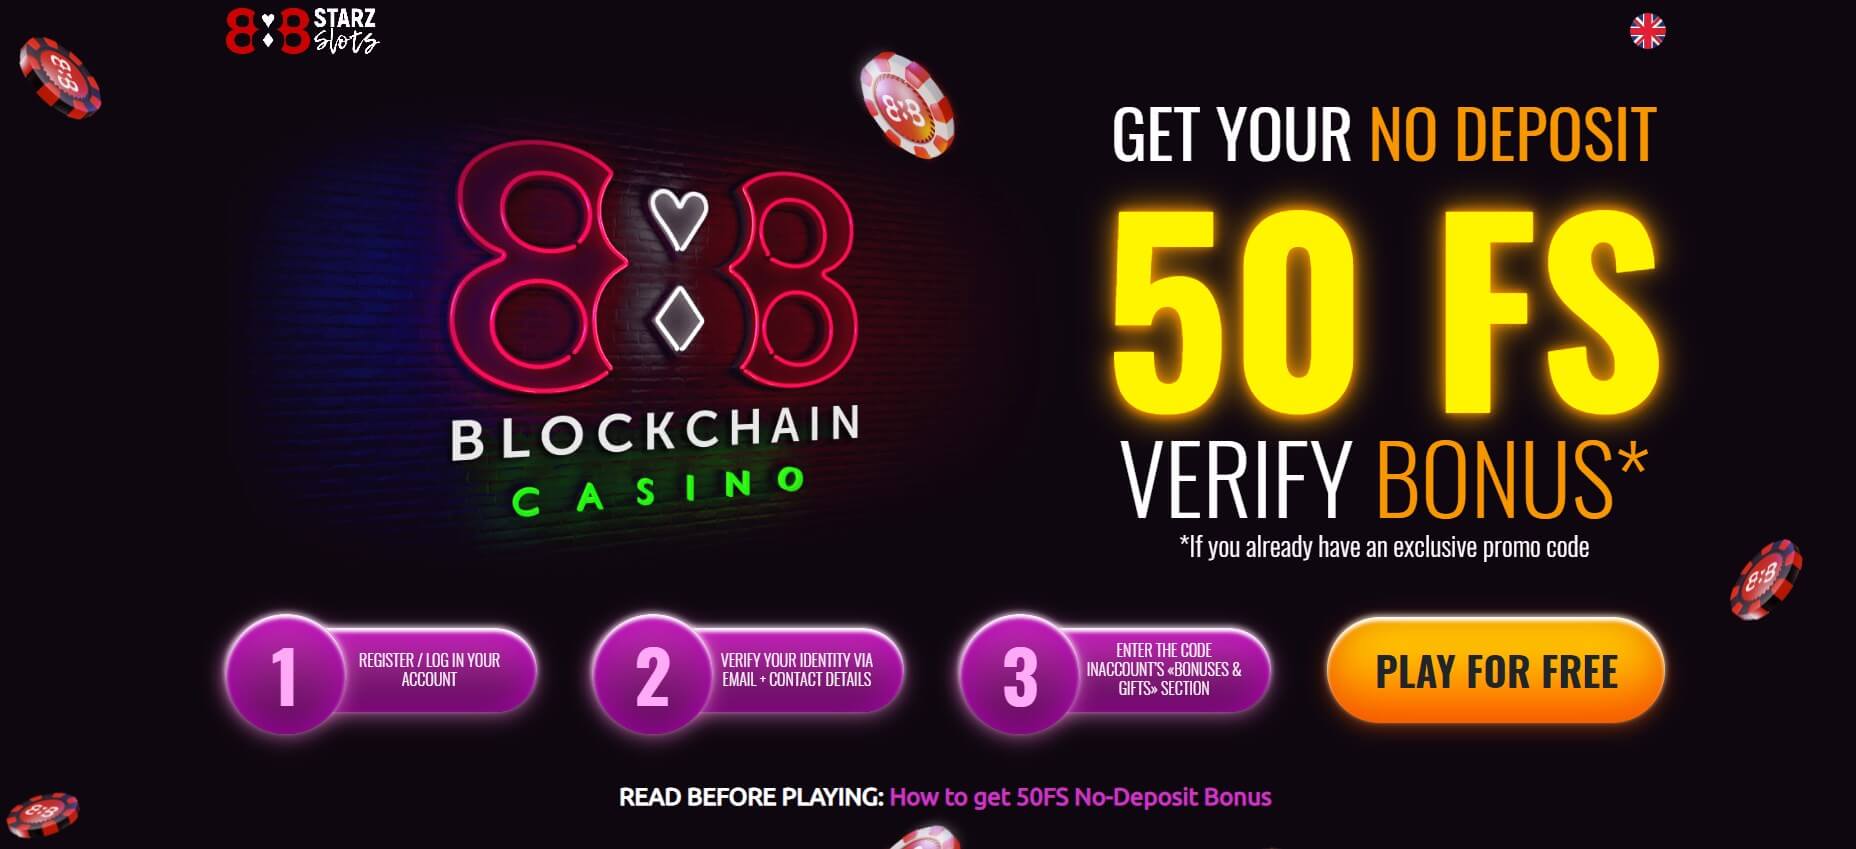 888starz casino бездепозитный бонус